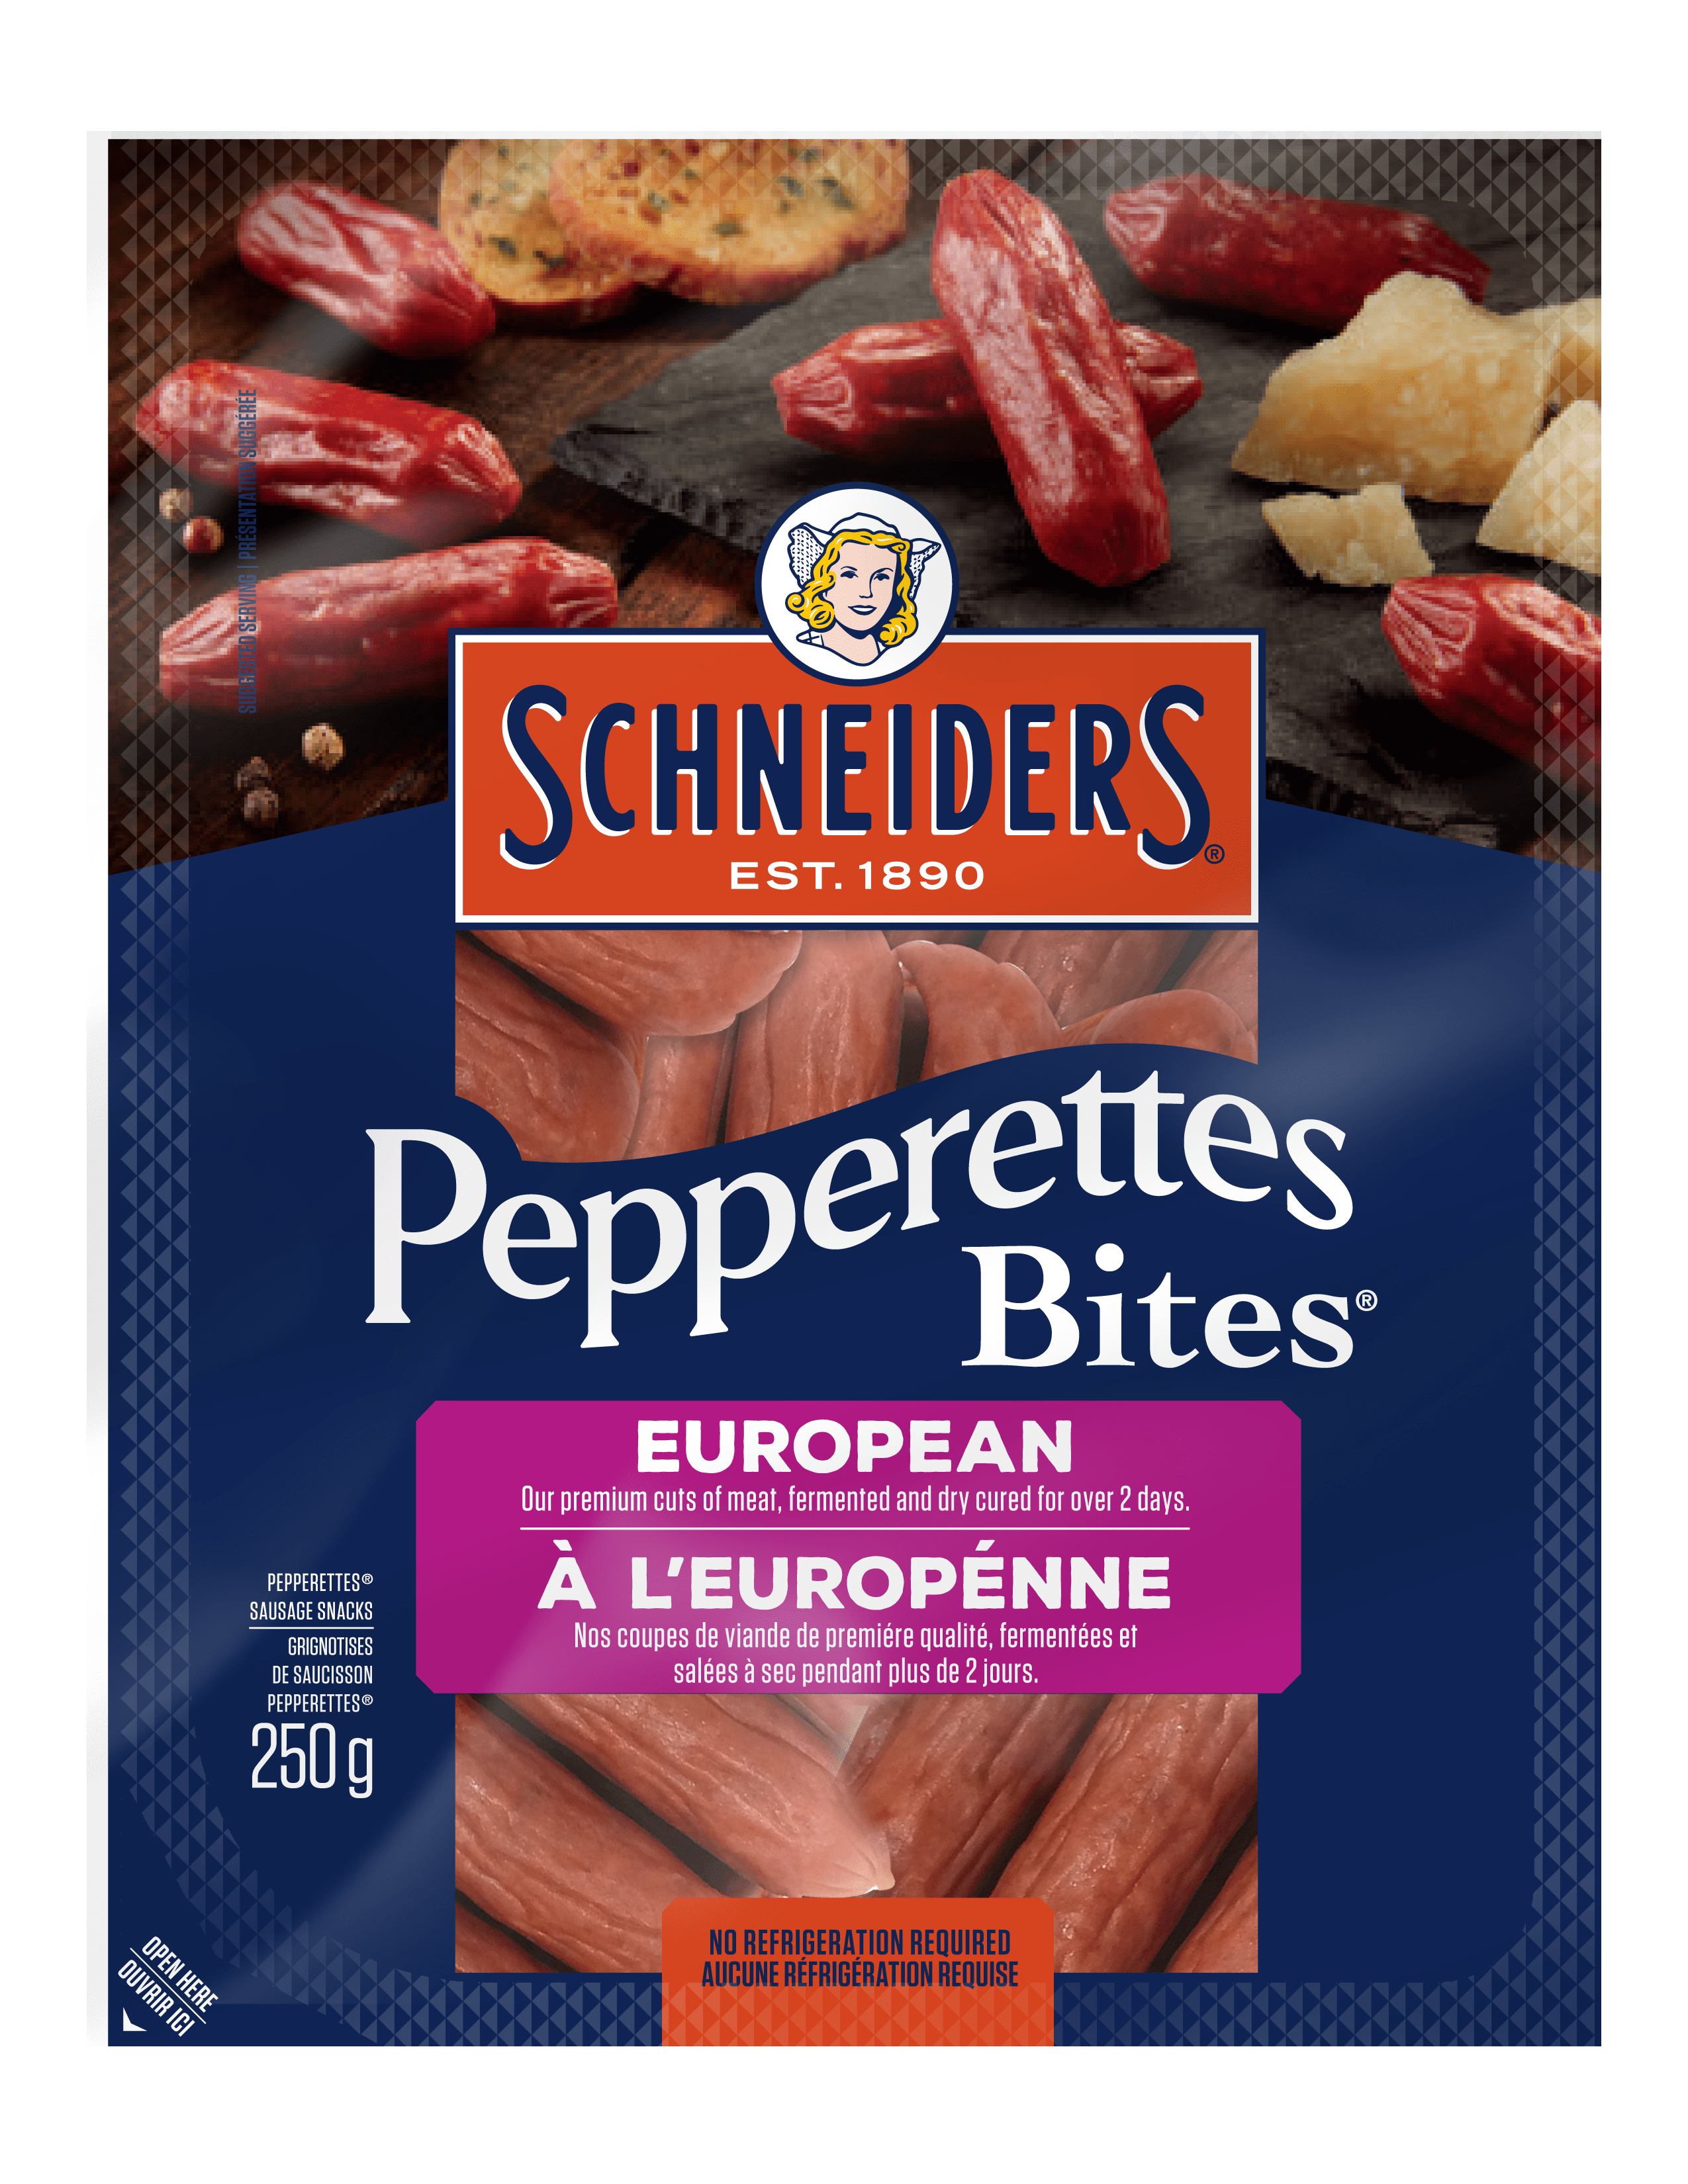 European Pepperettes Bites